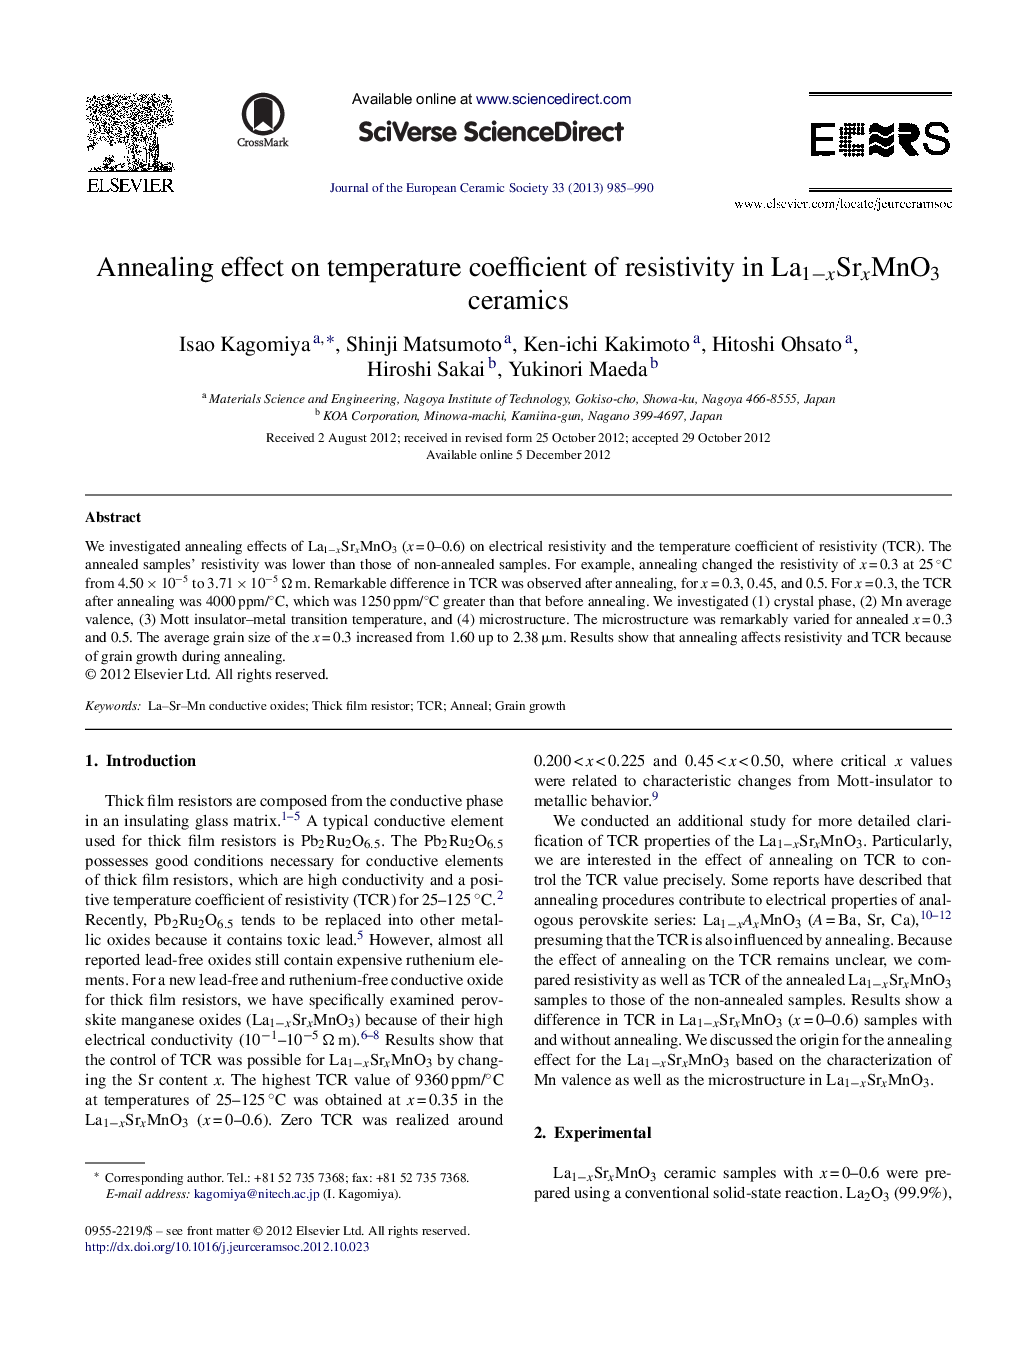 Annealing effect on temperature coefficient of resistivity in La1−xSrxMnO3 ceramics